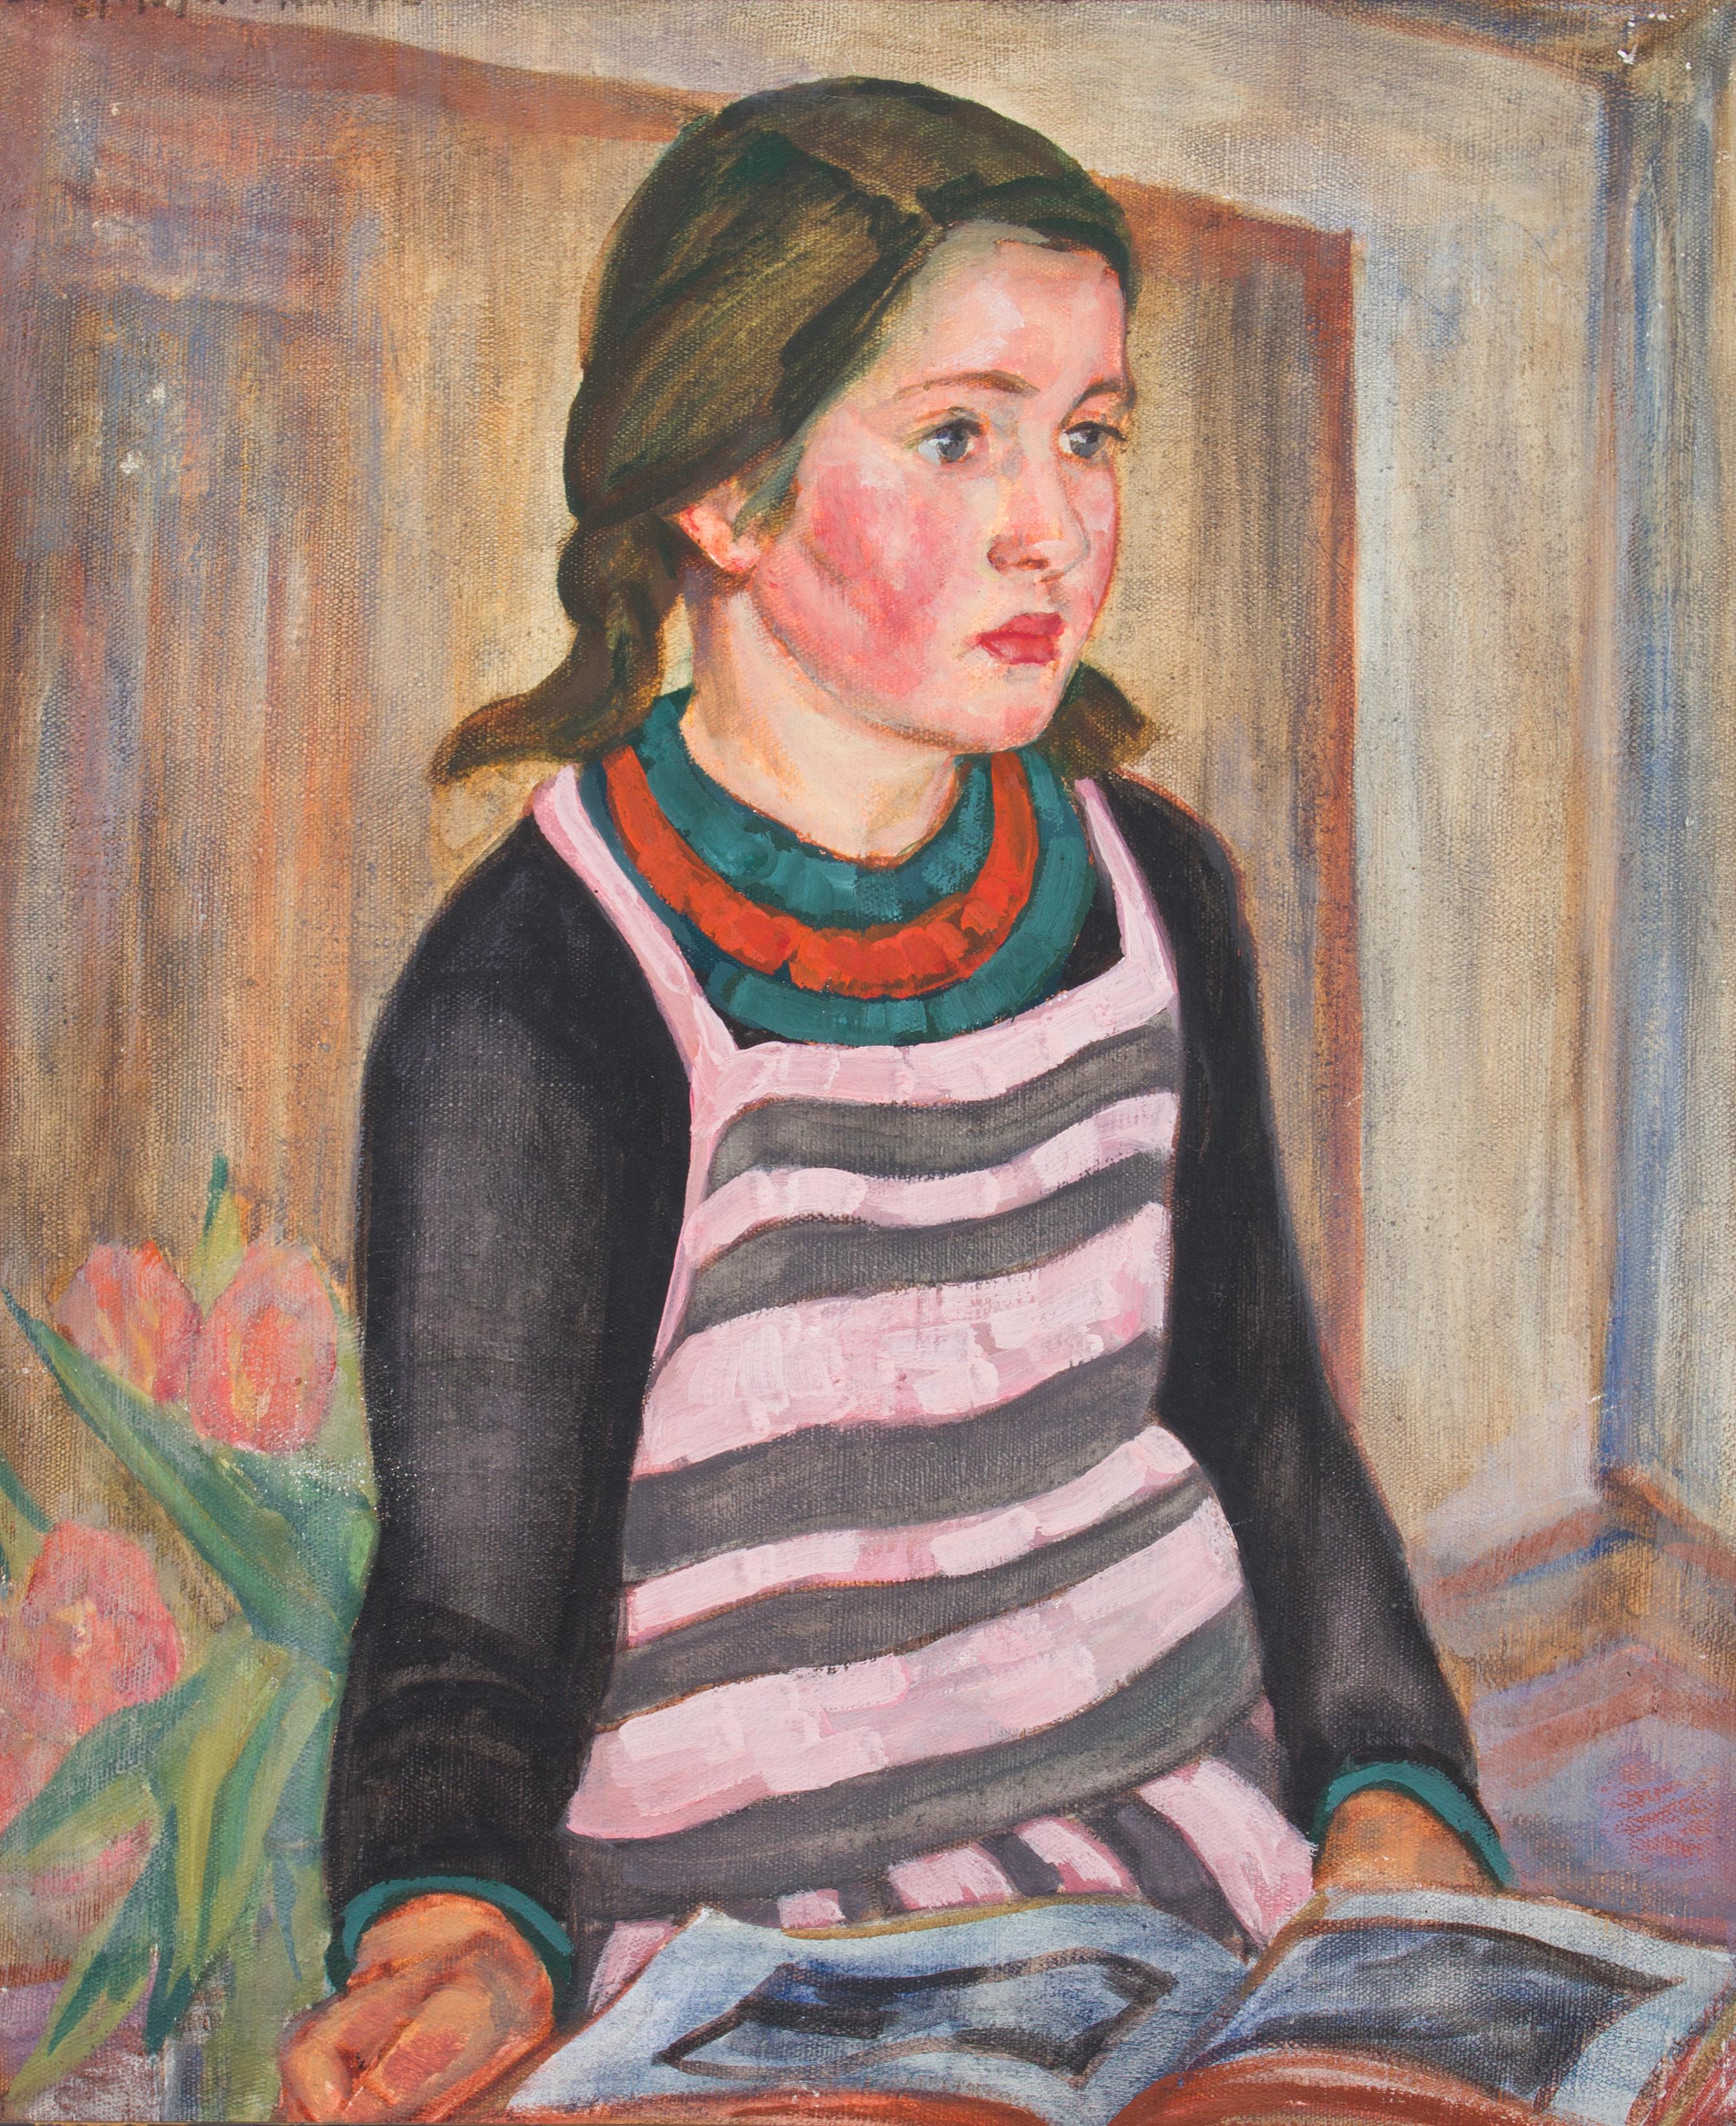 Edith Meyer von Kamptz Portrait Painting - Sitting girl with open book